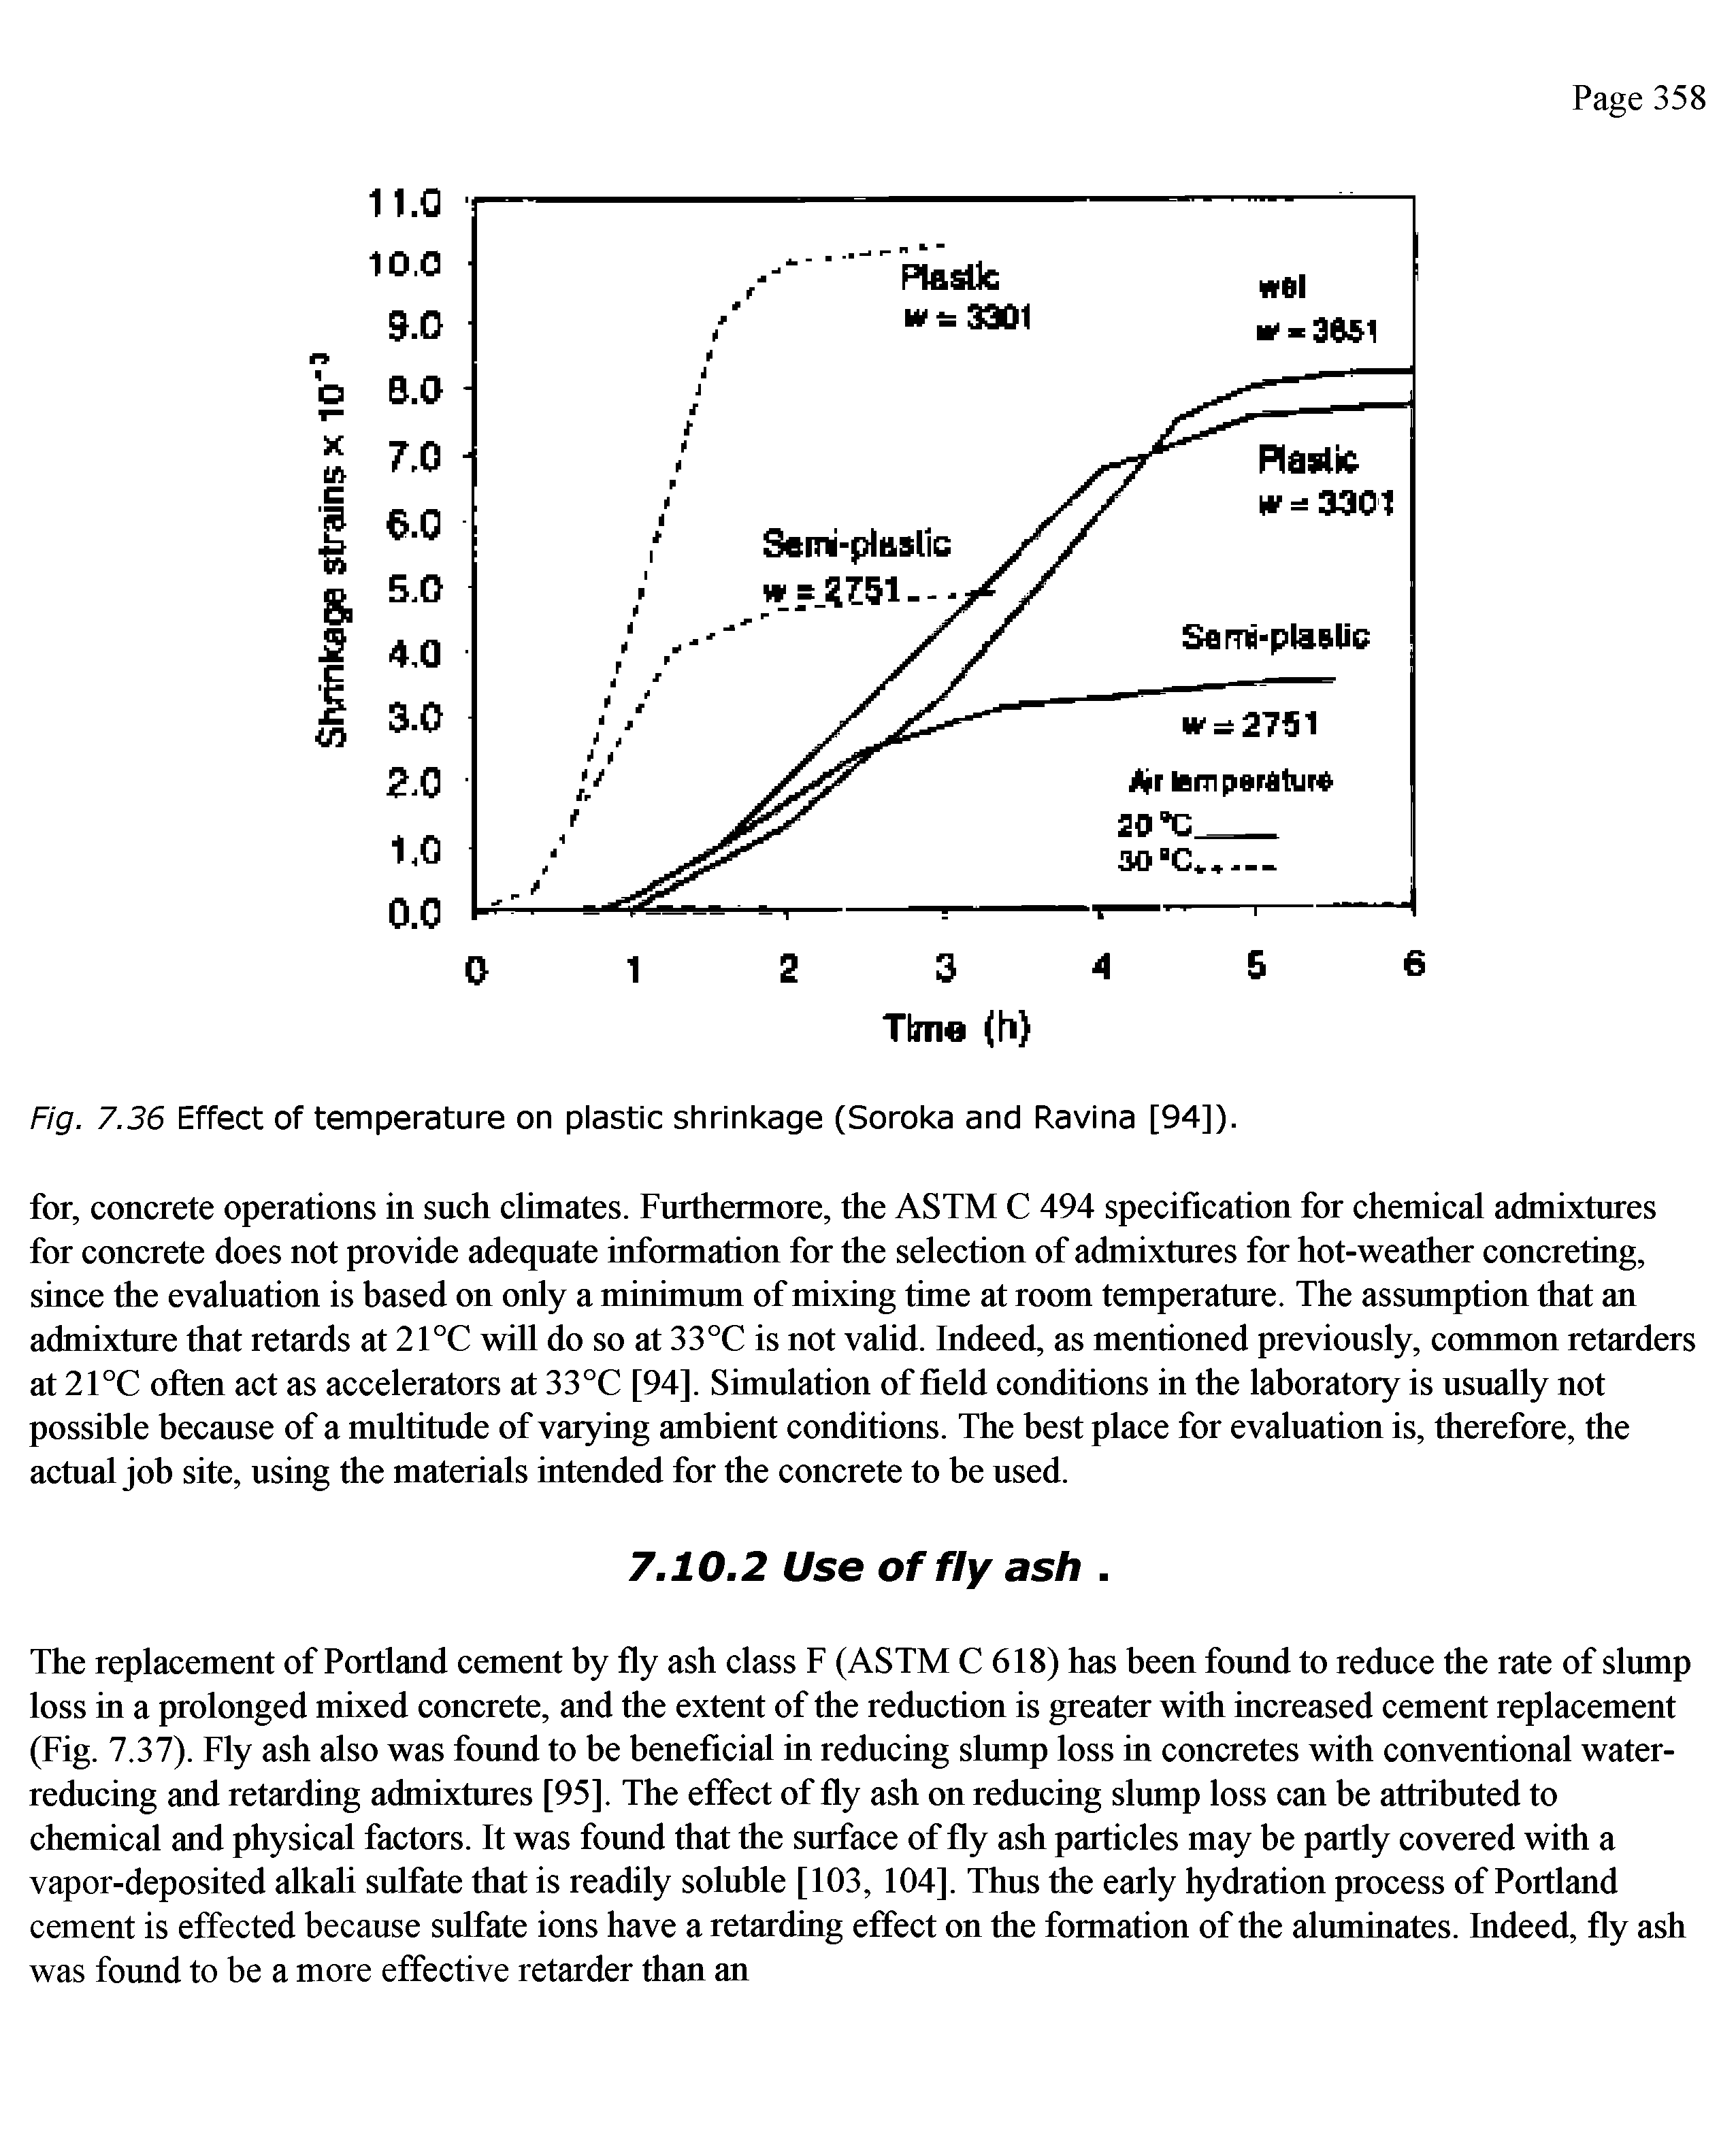 Fig. 7.36 Effect of temperature on plastic shrinkage (Soroka and Ravina [94]).